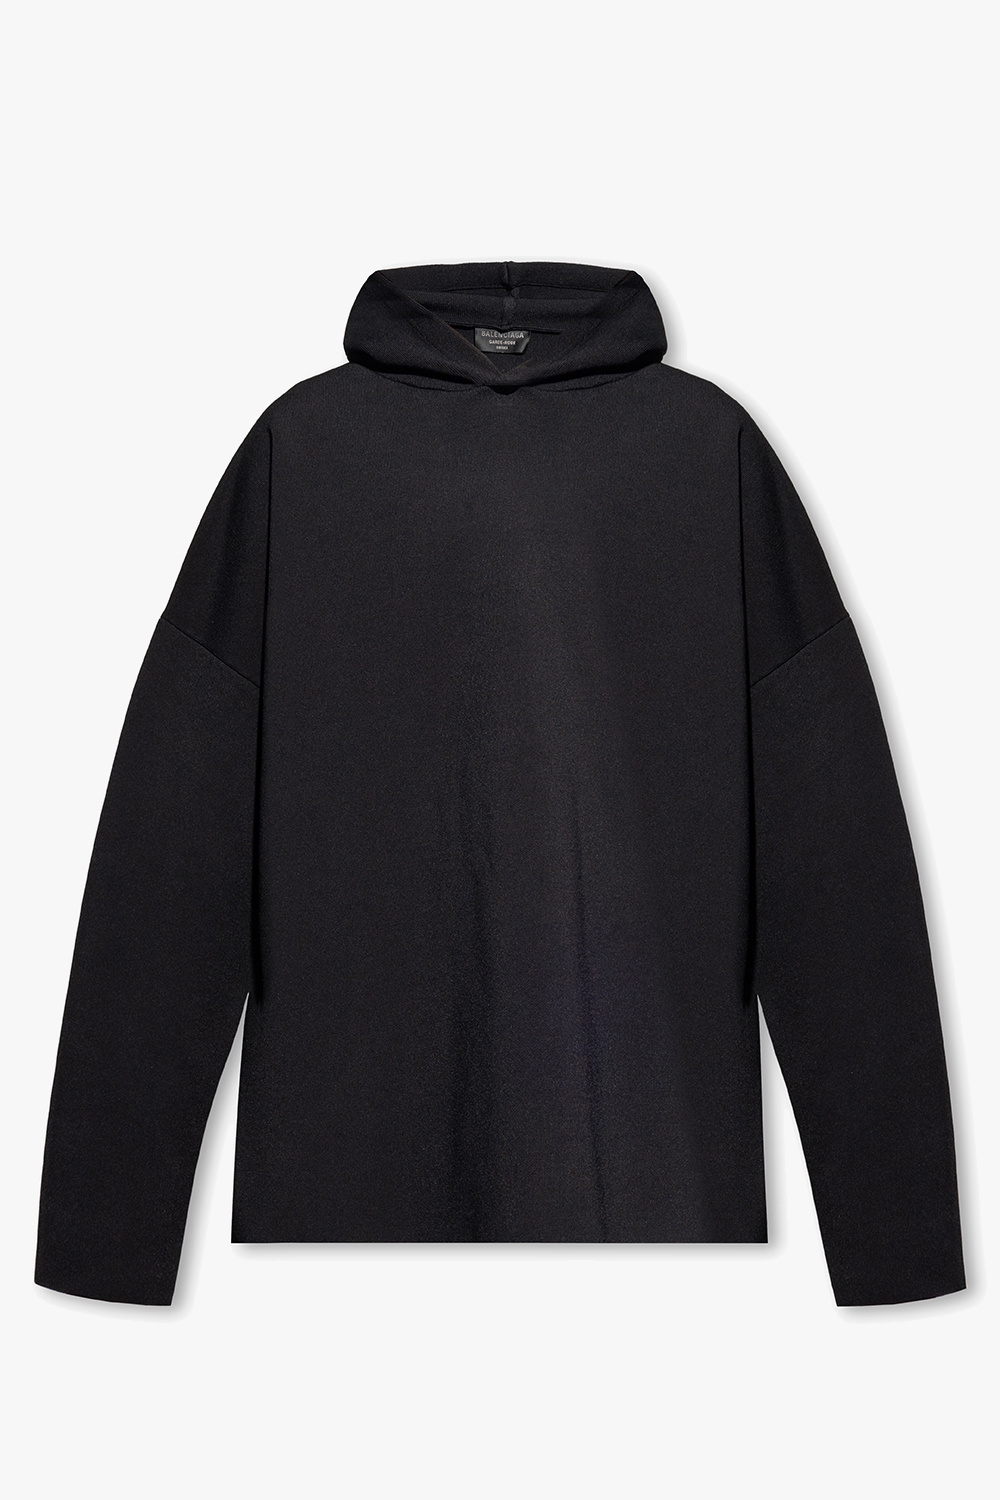 Balenciaga Relaxed-fitting hoodie